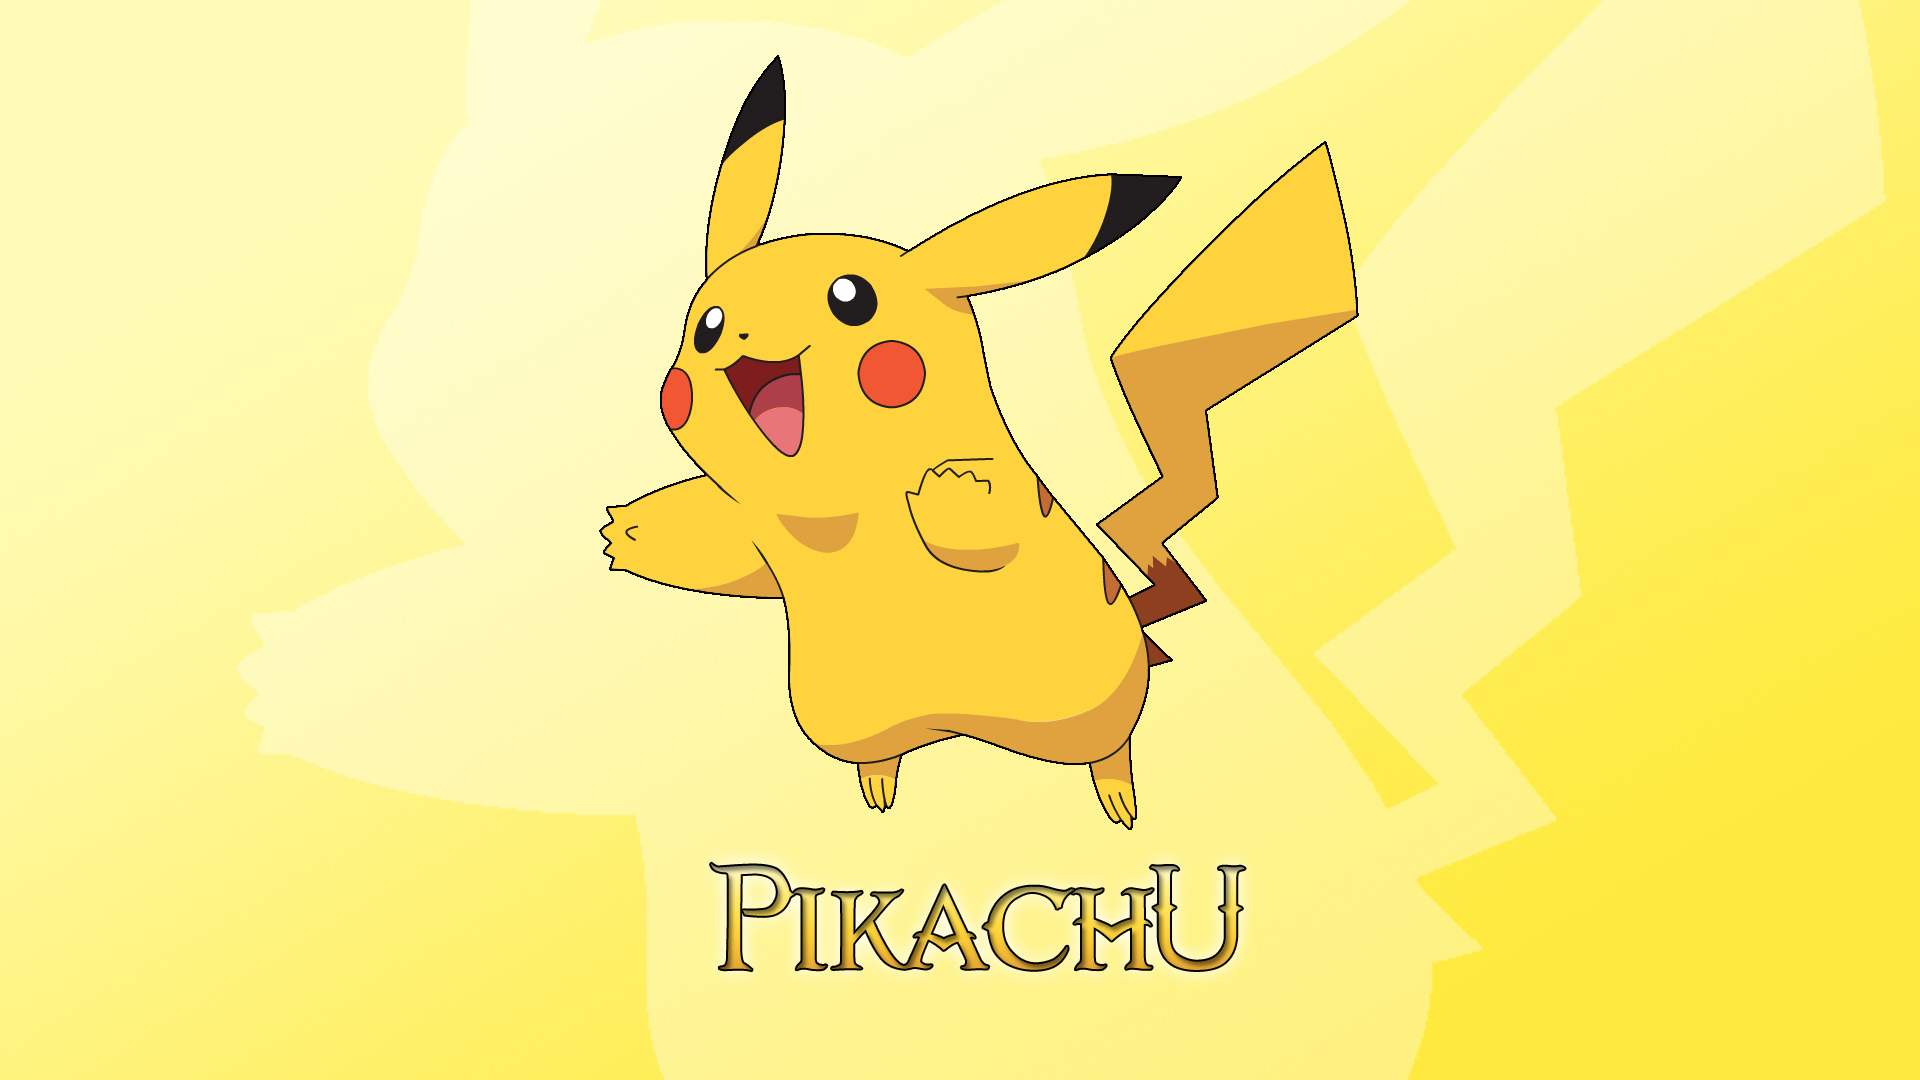 Cute Pikachu Wallpaper 4420 Hd Wallpapers in Games   Imagescicom